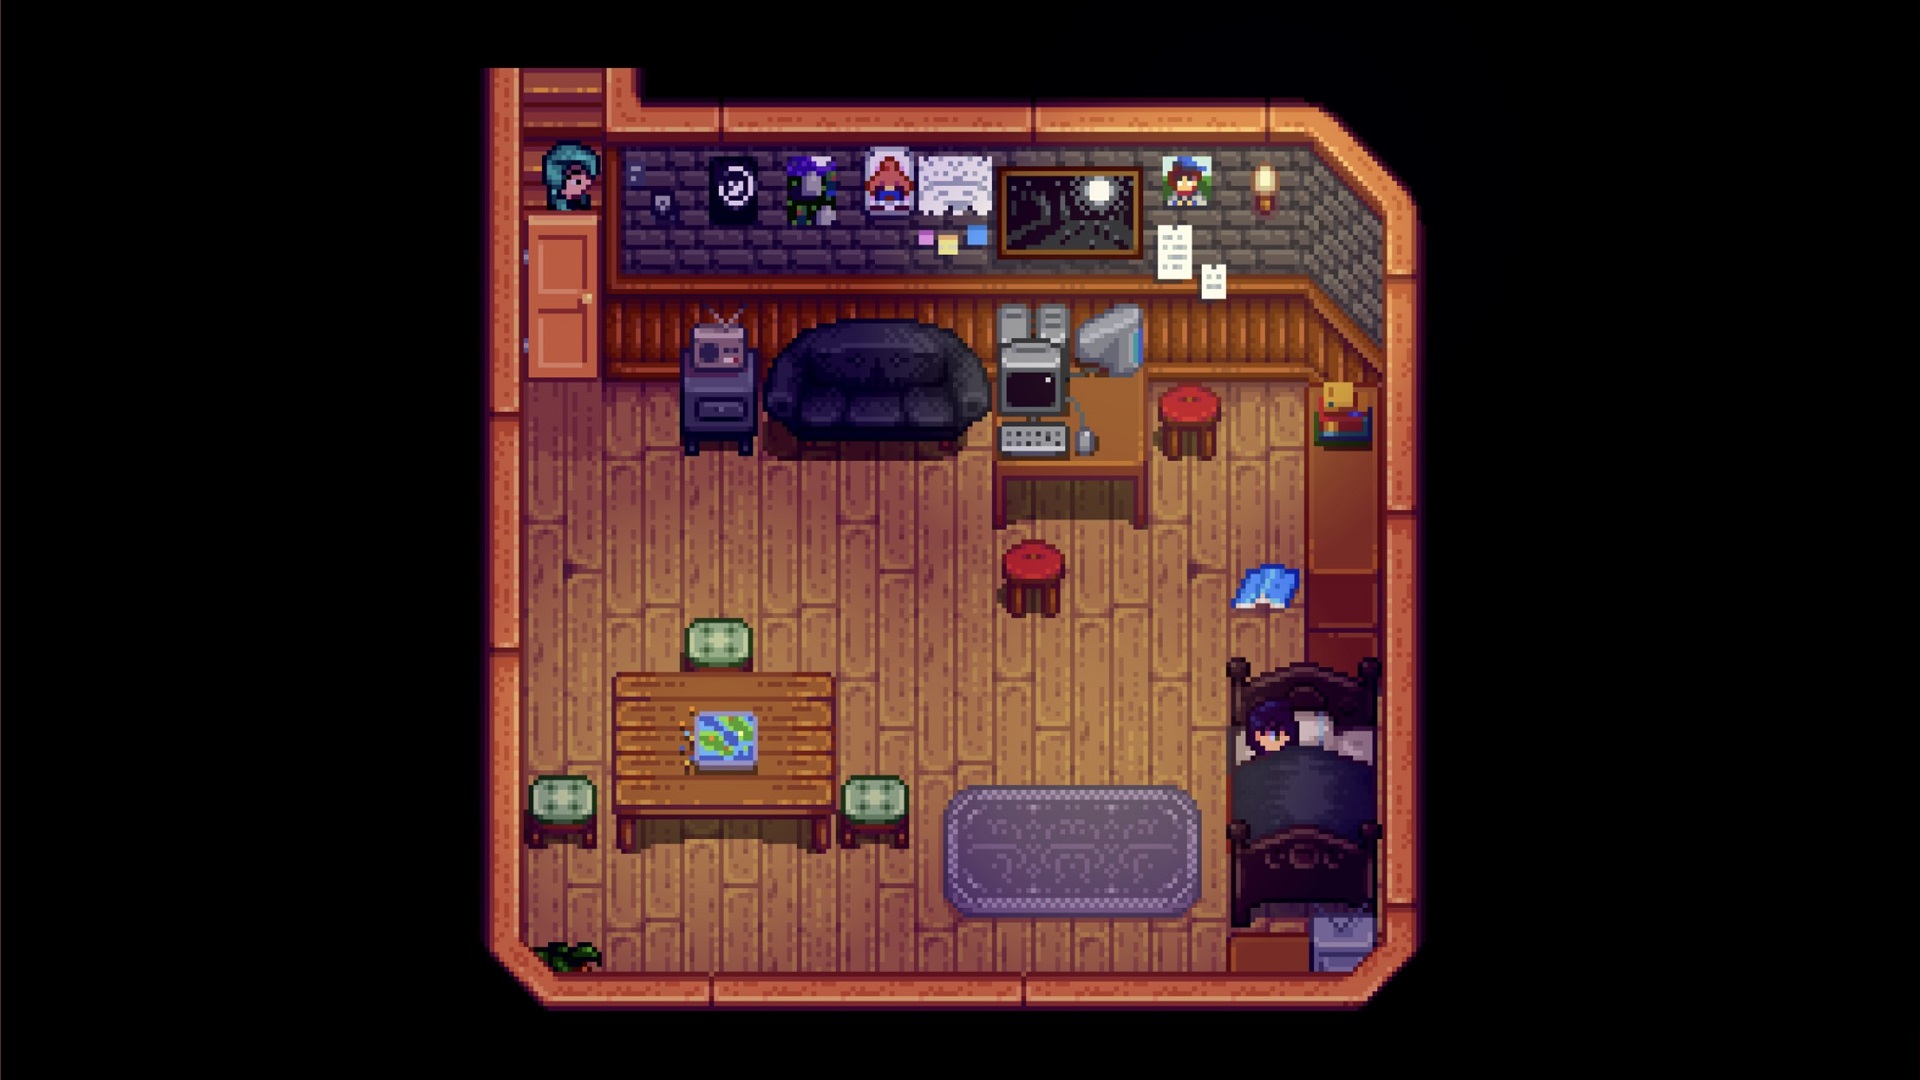 A look into Sebastian's bedroom